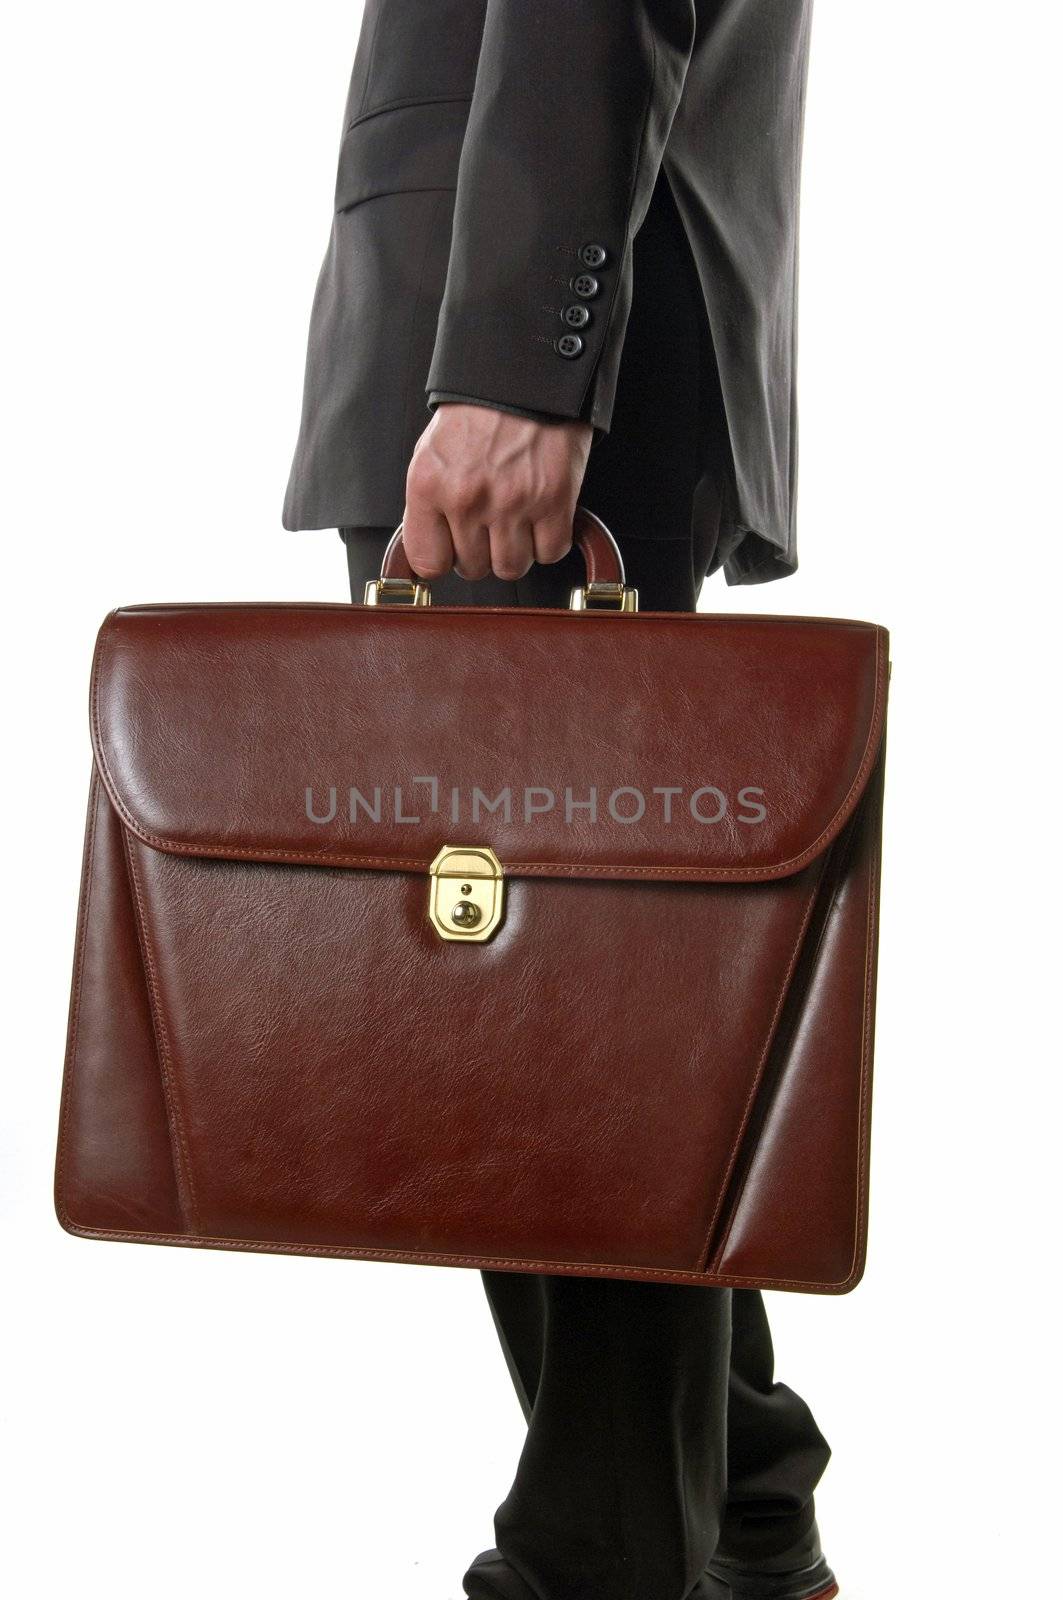 Briefcase in Hand of Businessman